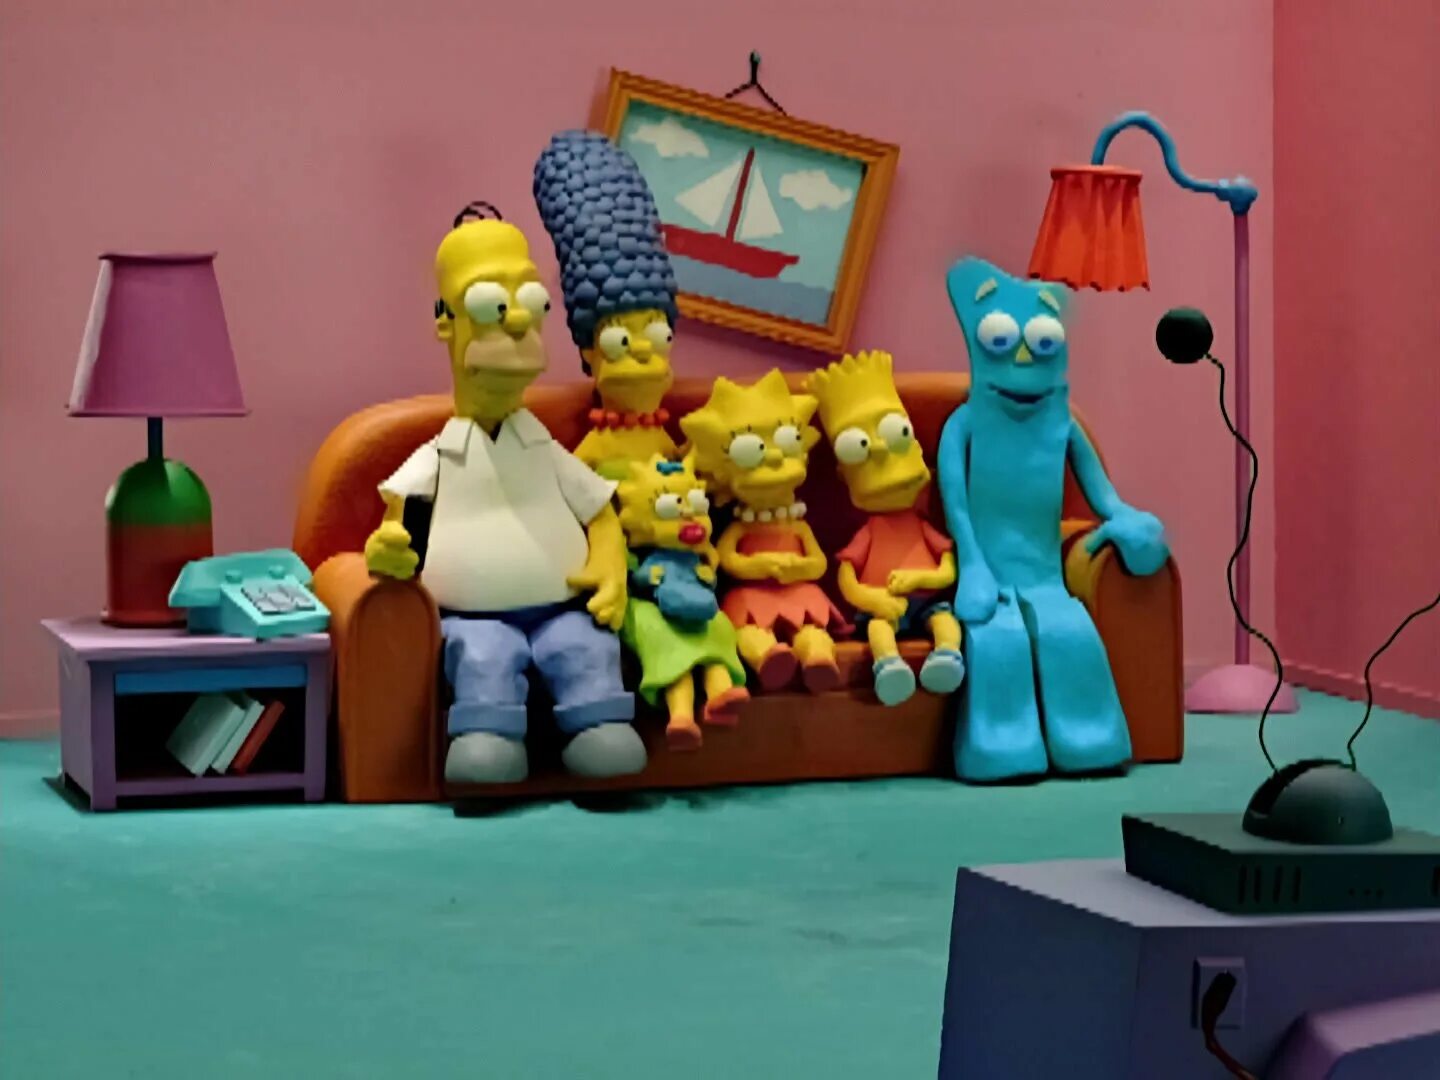 Барт симпсон из пластилина. Мардж симпсон из пластилина. Симпсоны пластилин. Комната из пластилина.